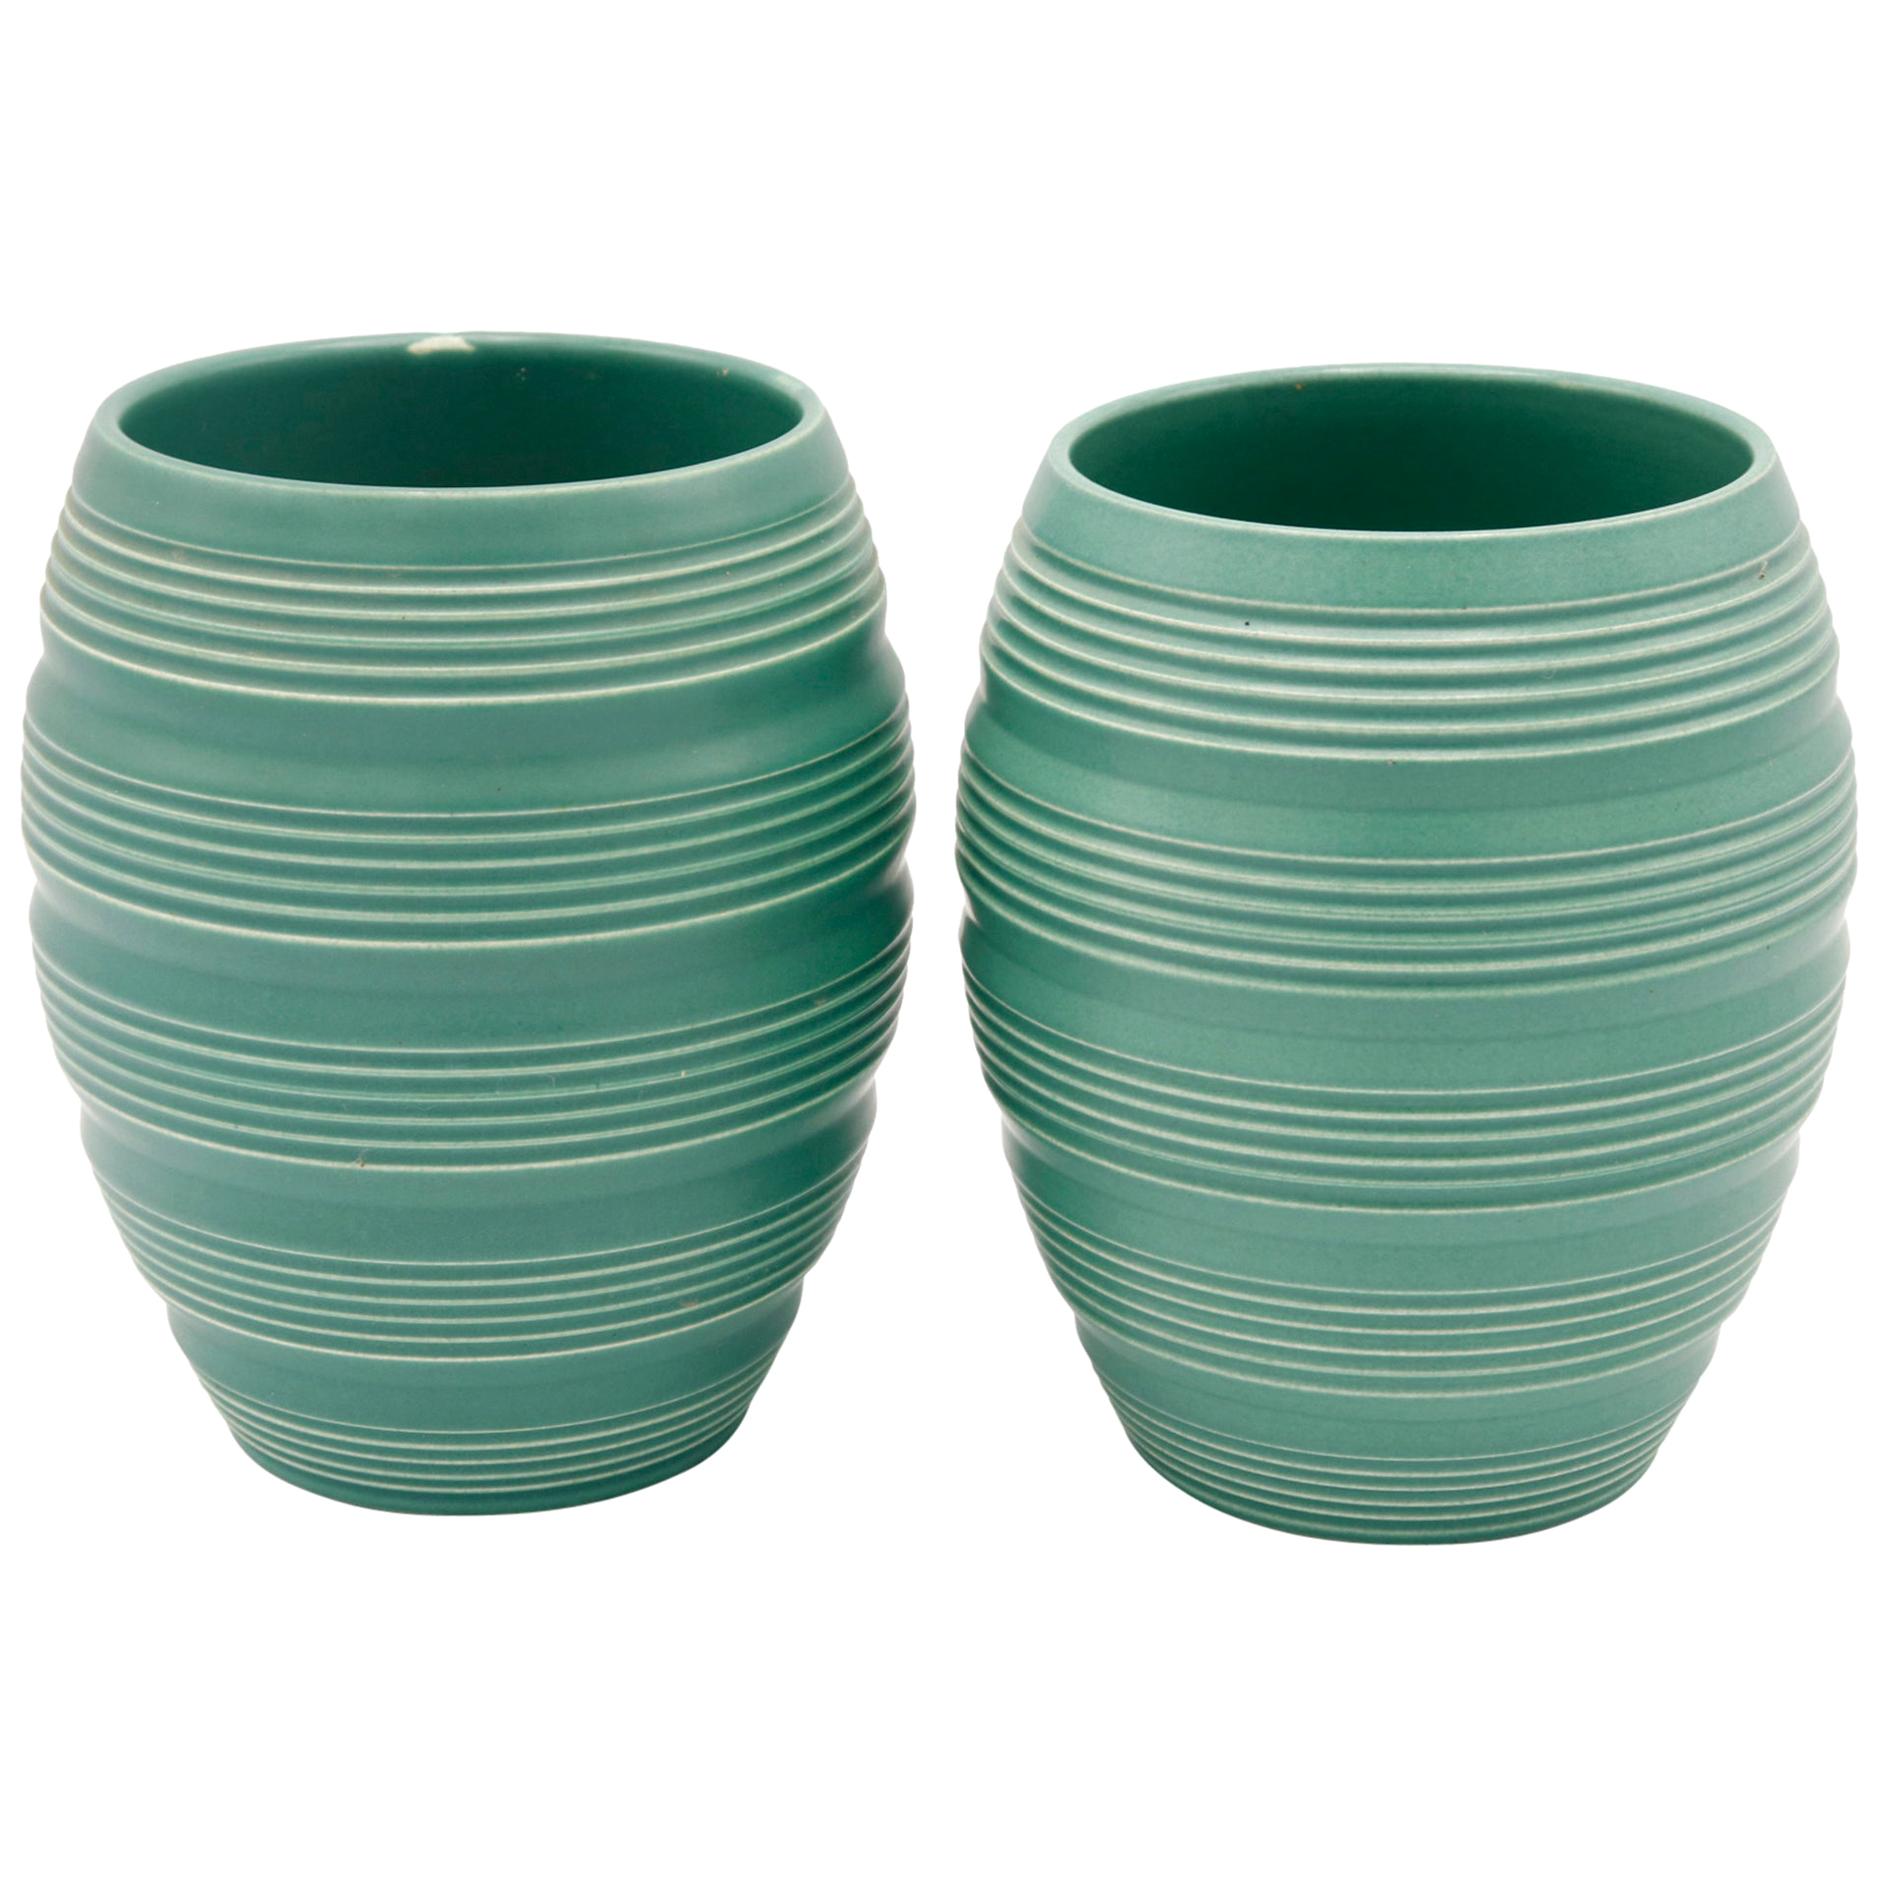 Pair Keith Murray Barrel Vases in Green